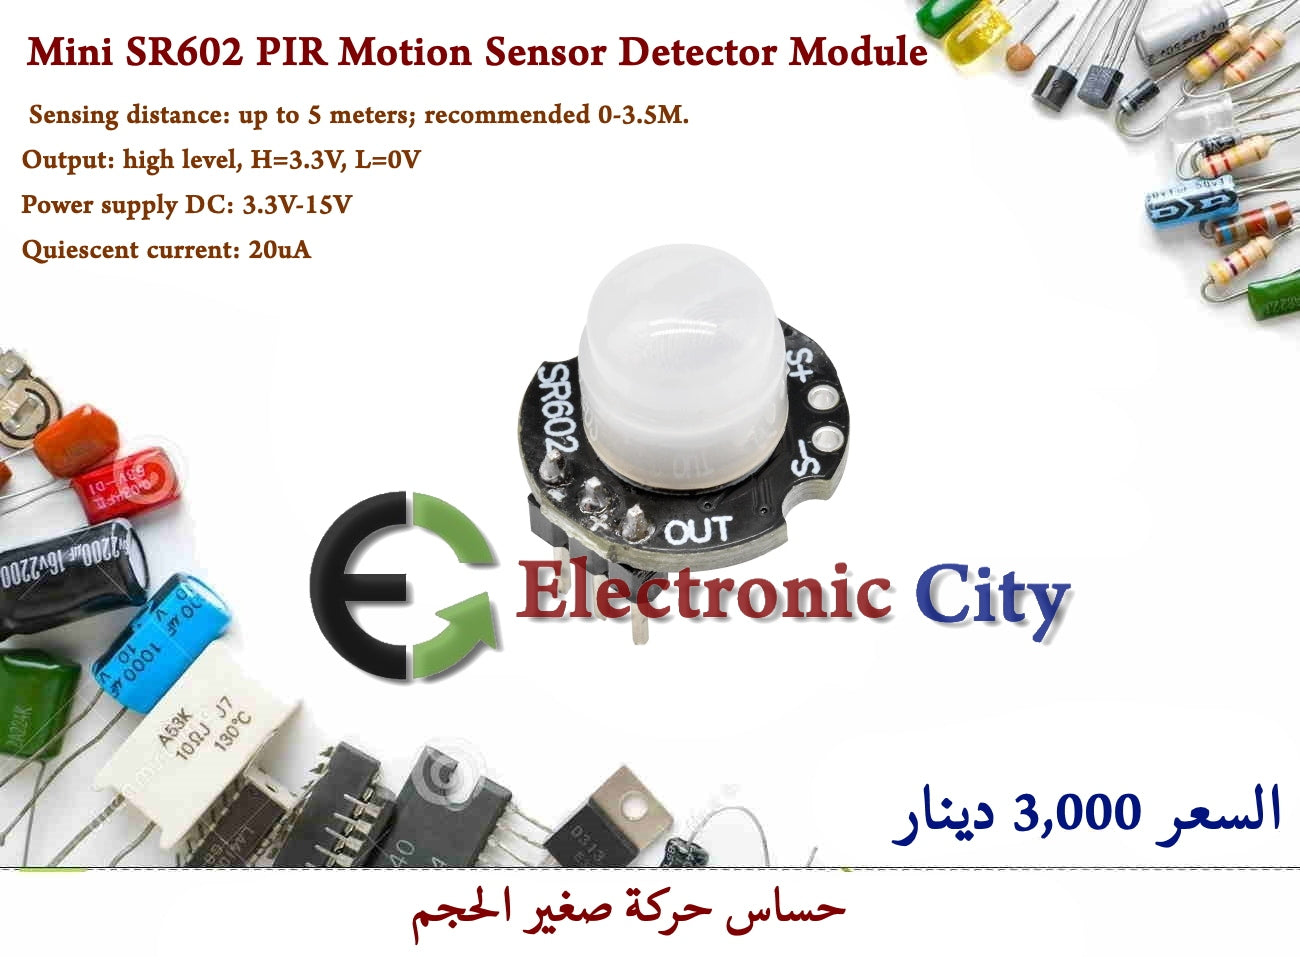 Mini SR602 PIR Motion Sensor Detector Module